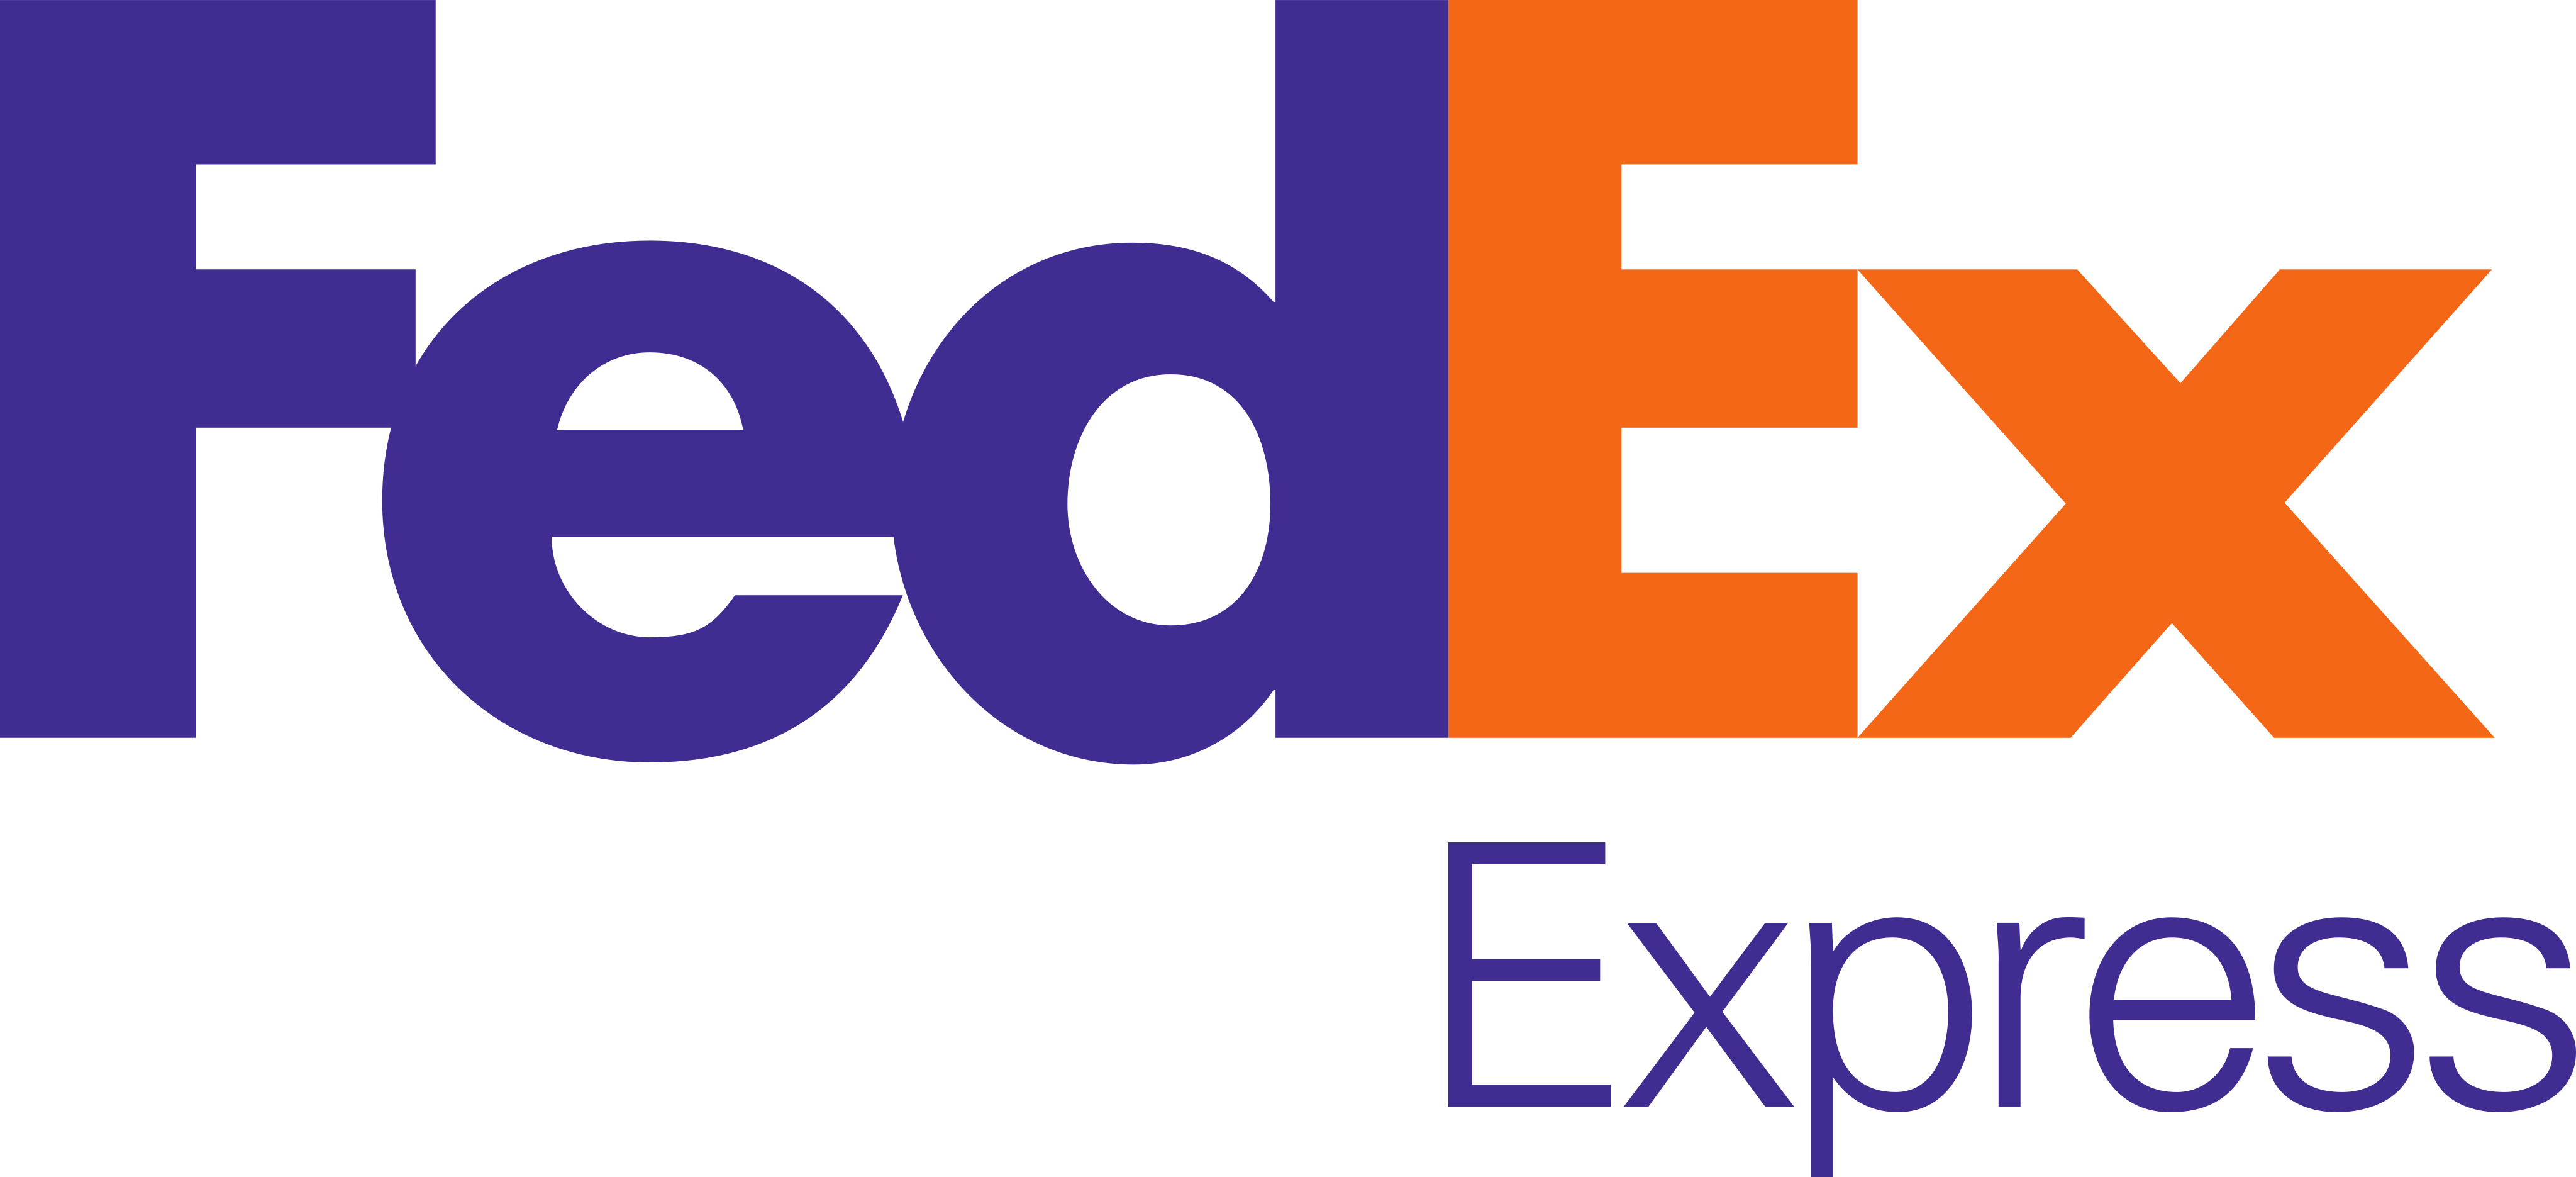 federal express logo png #42674